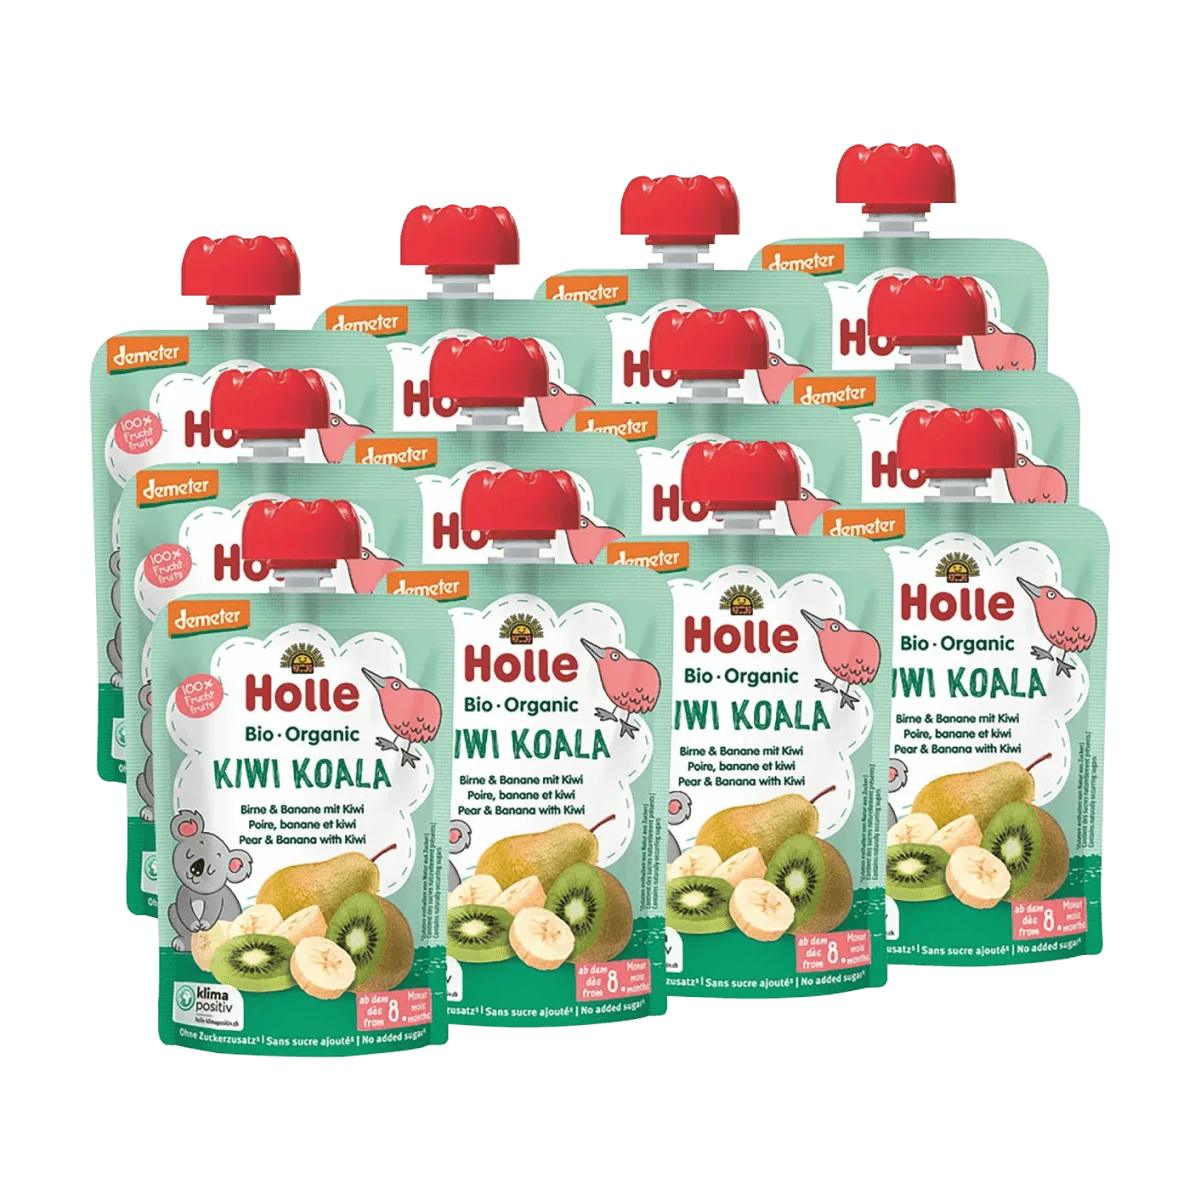 Holle baby food Quetschie Kiwi Koala, Birne & Banane mit Kiwi ab 8 Monaten, 100 g